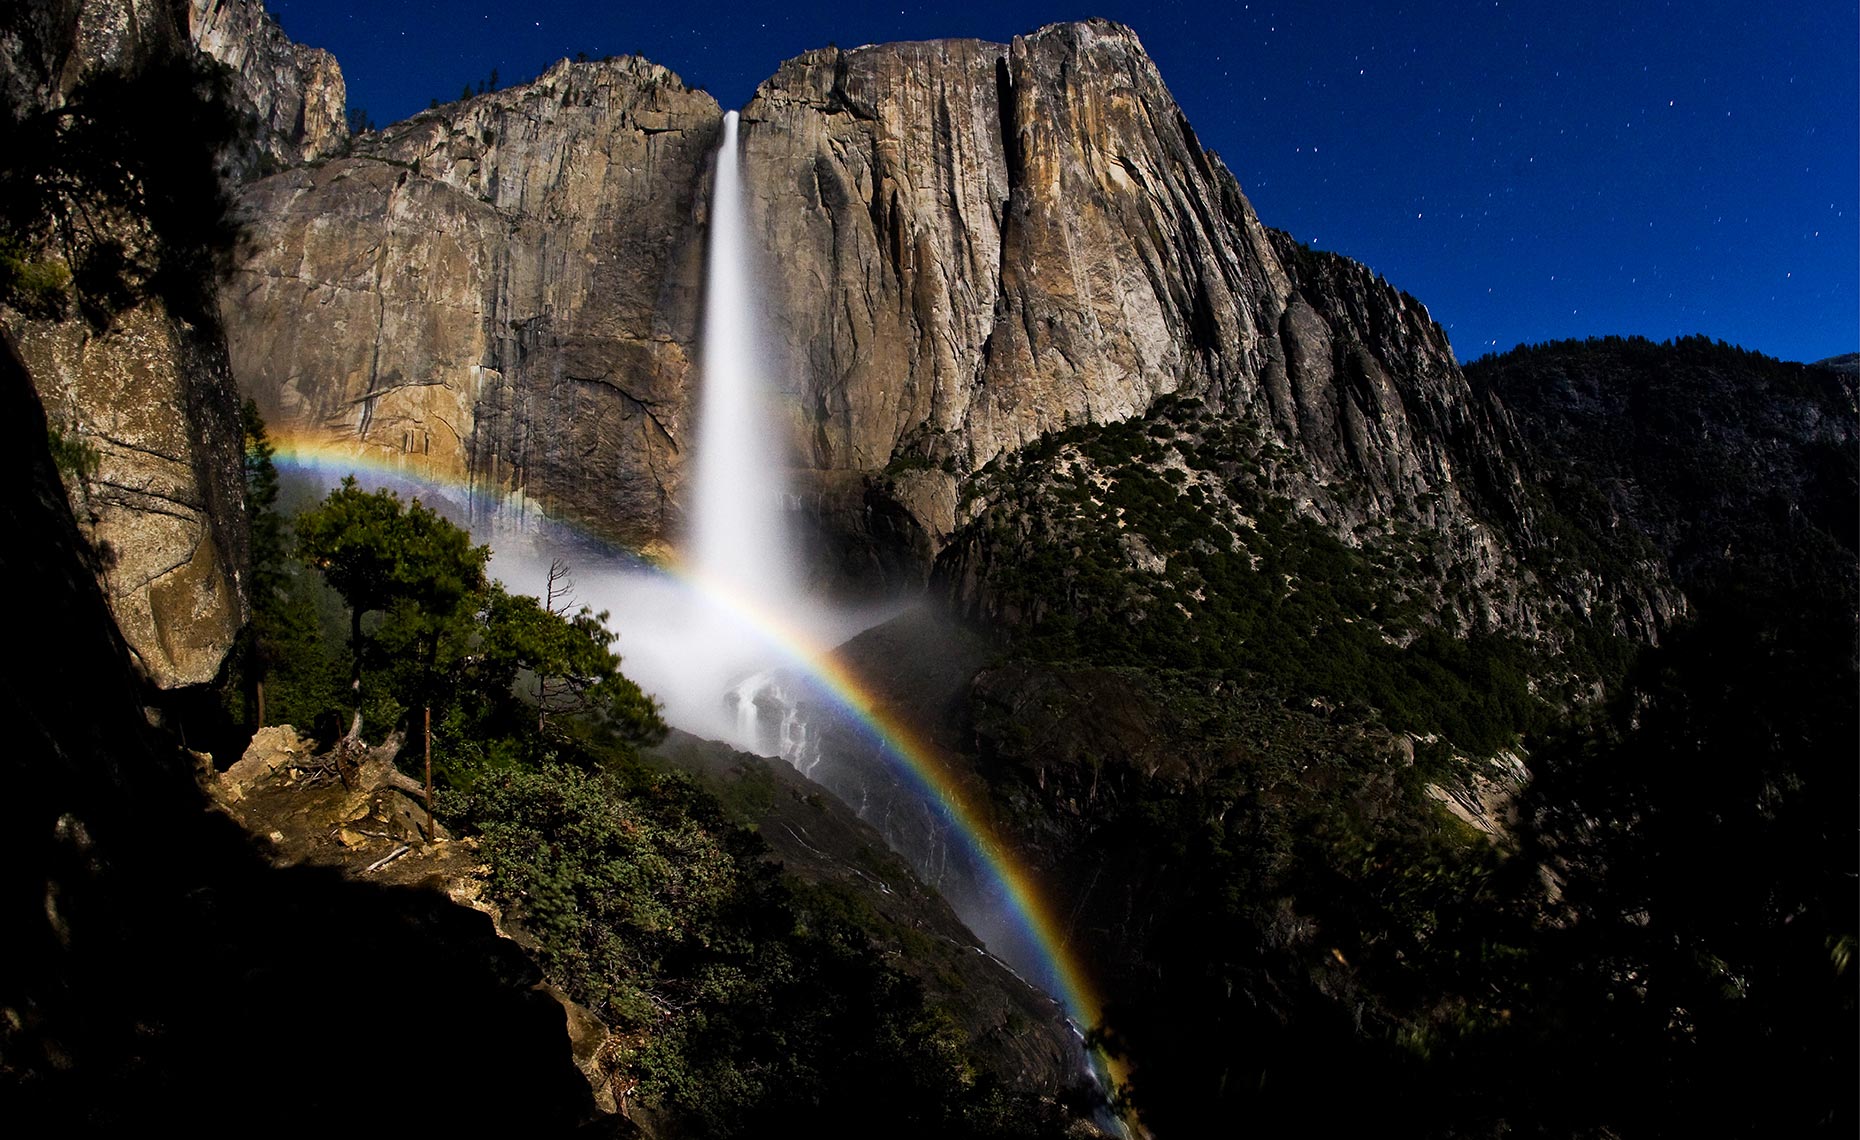 04_Moonbow_Yosemite_Falls_Yosemite_National_Park_California_Environment_Landscape_Chris_Wellhausen_Photography.JPG